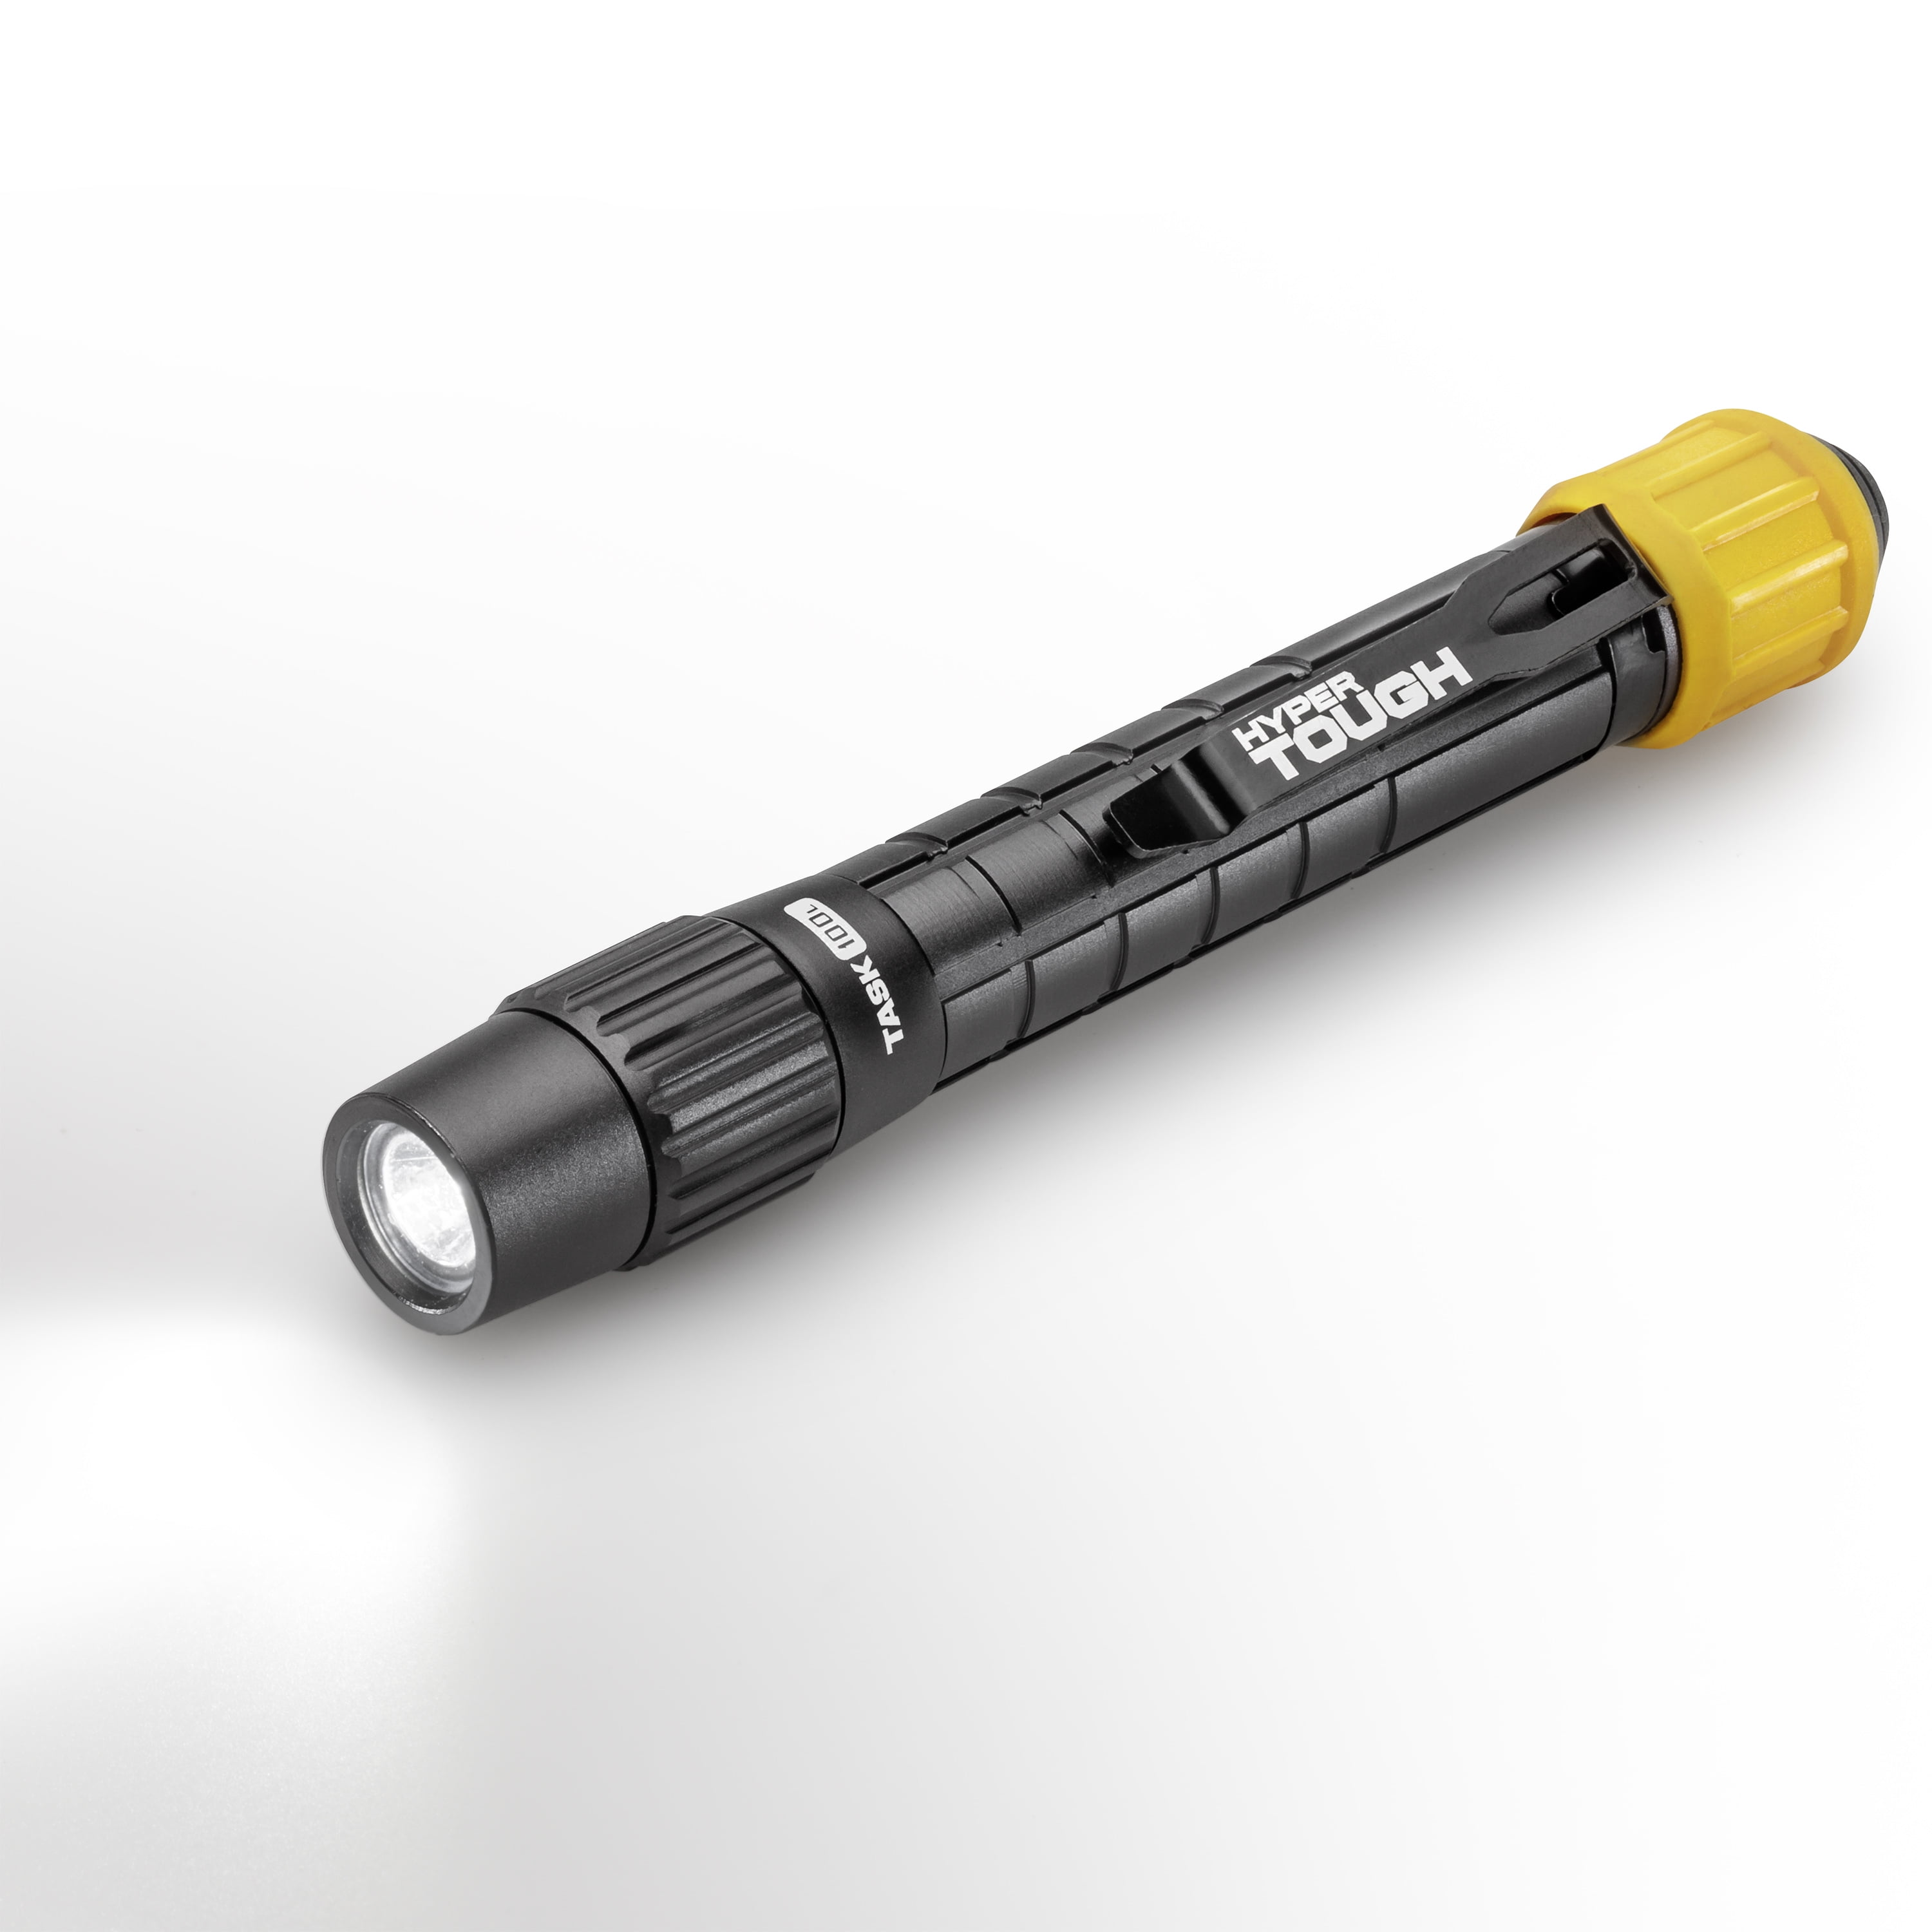 Hyper Tough 100 Lumen Pen Light Batteries Included